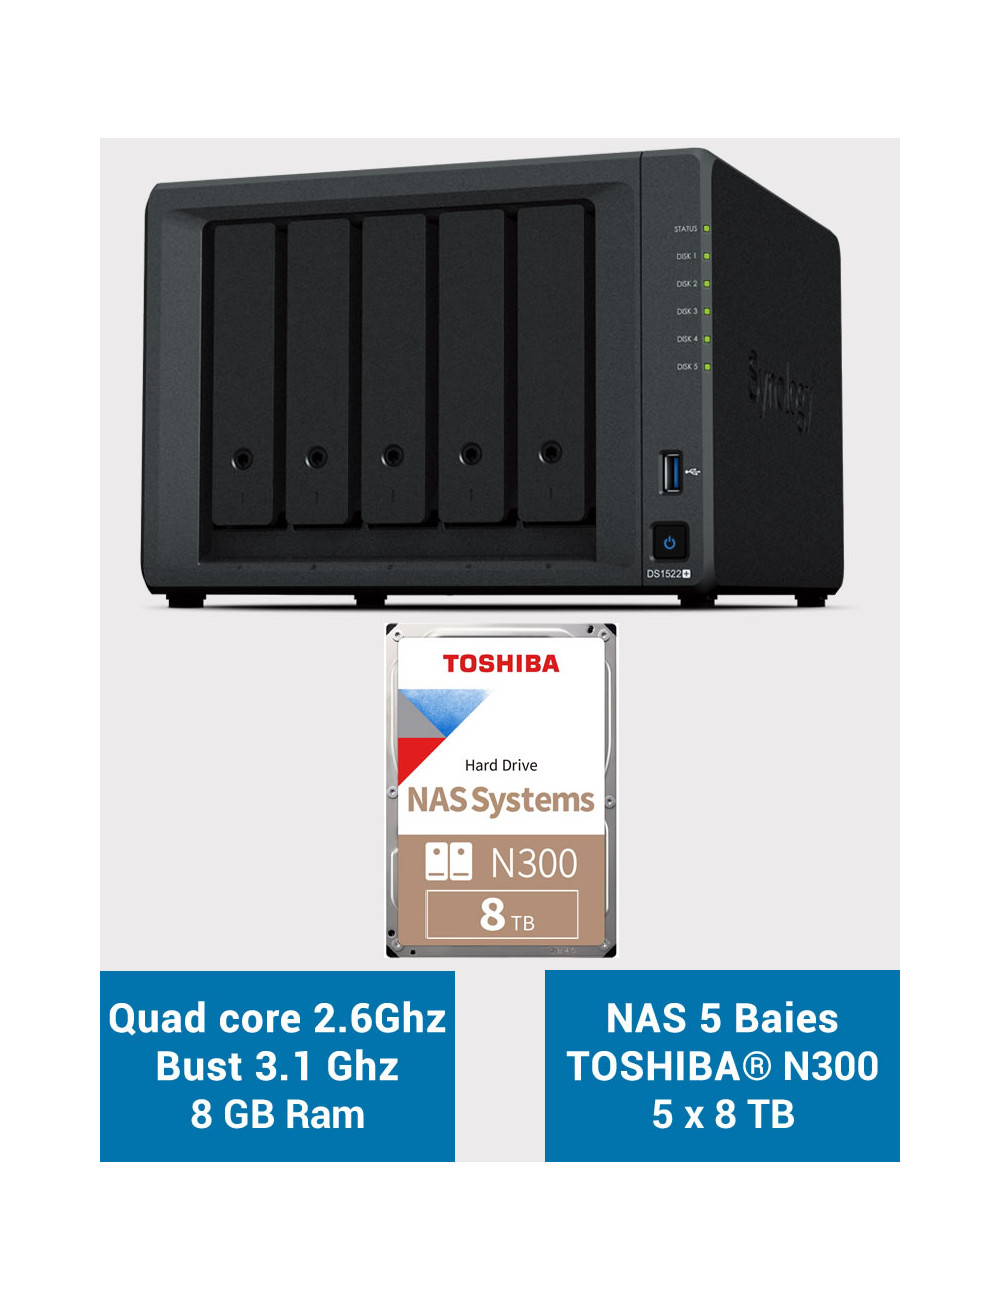 Synology DiskStation® DS1522+ NAS Server Toshiba N300 40TB (5x8TB)